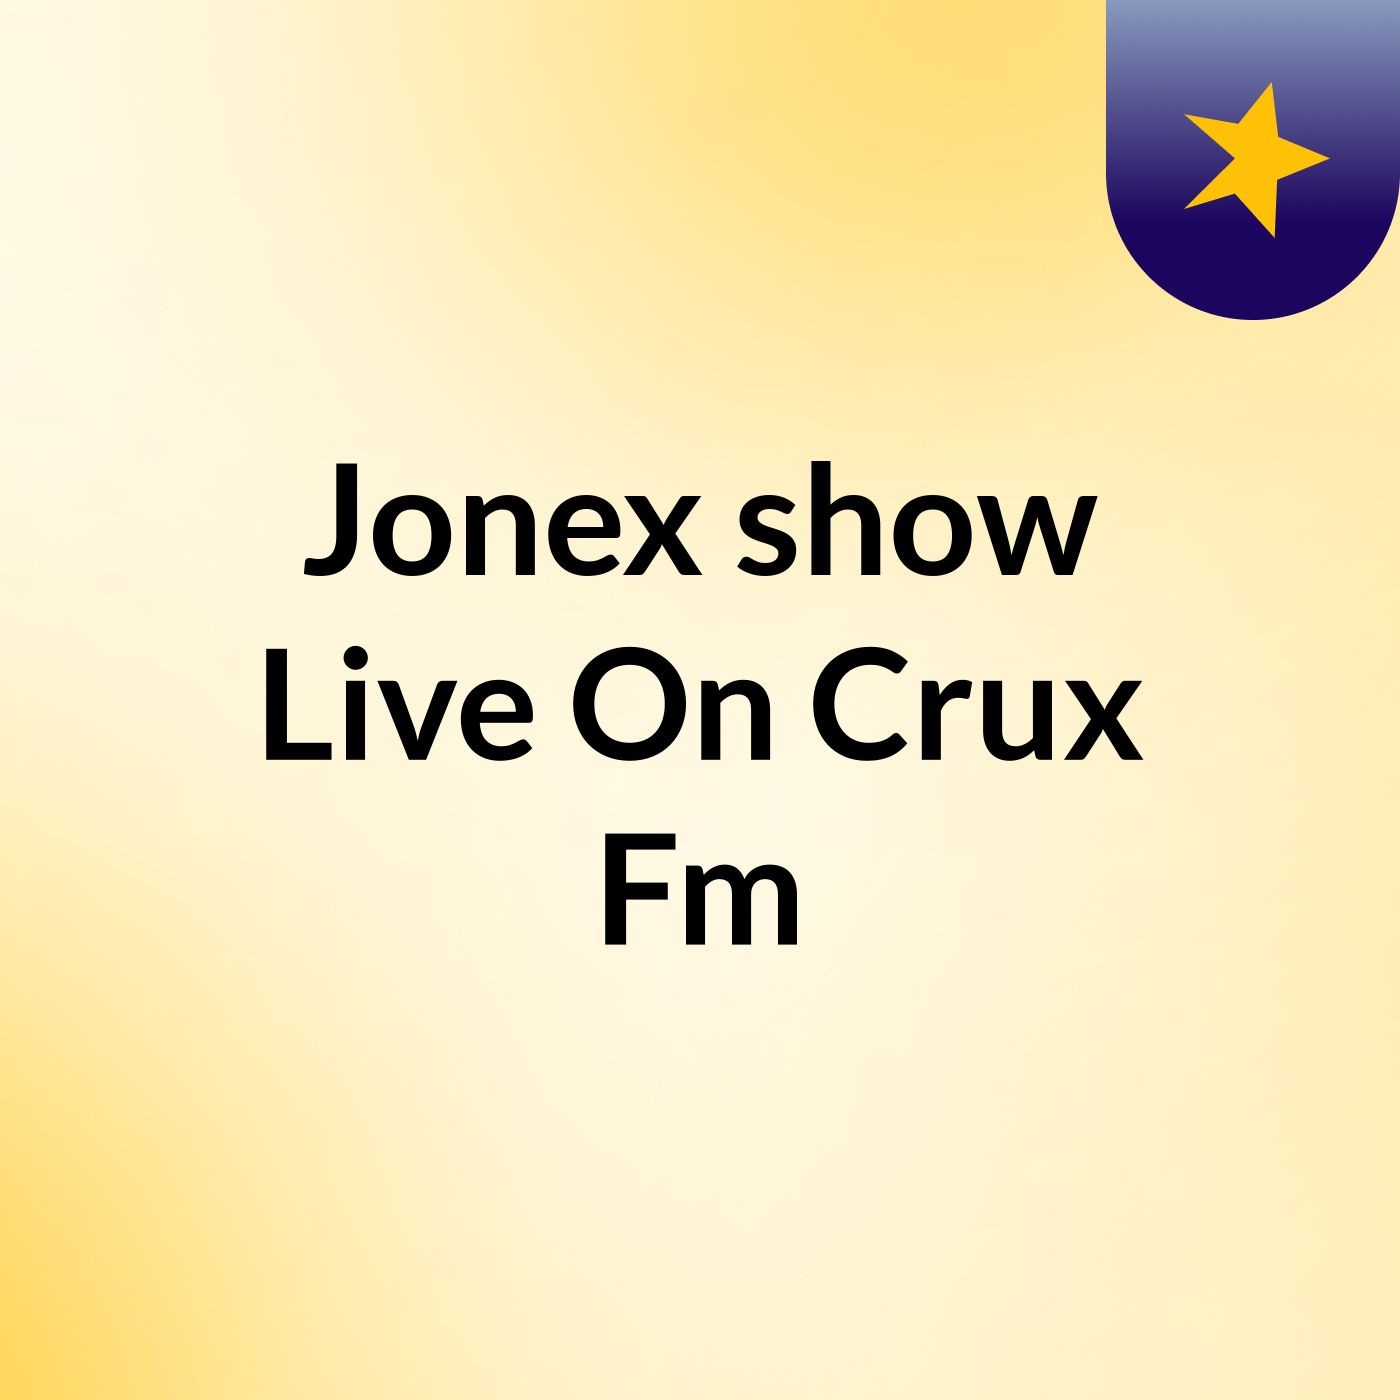 Jonex show Live On Crux Fm